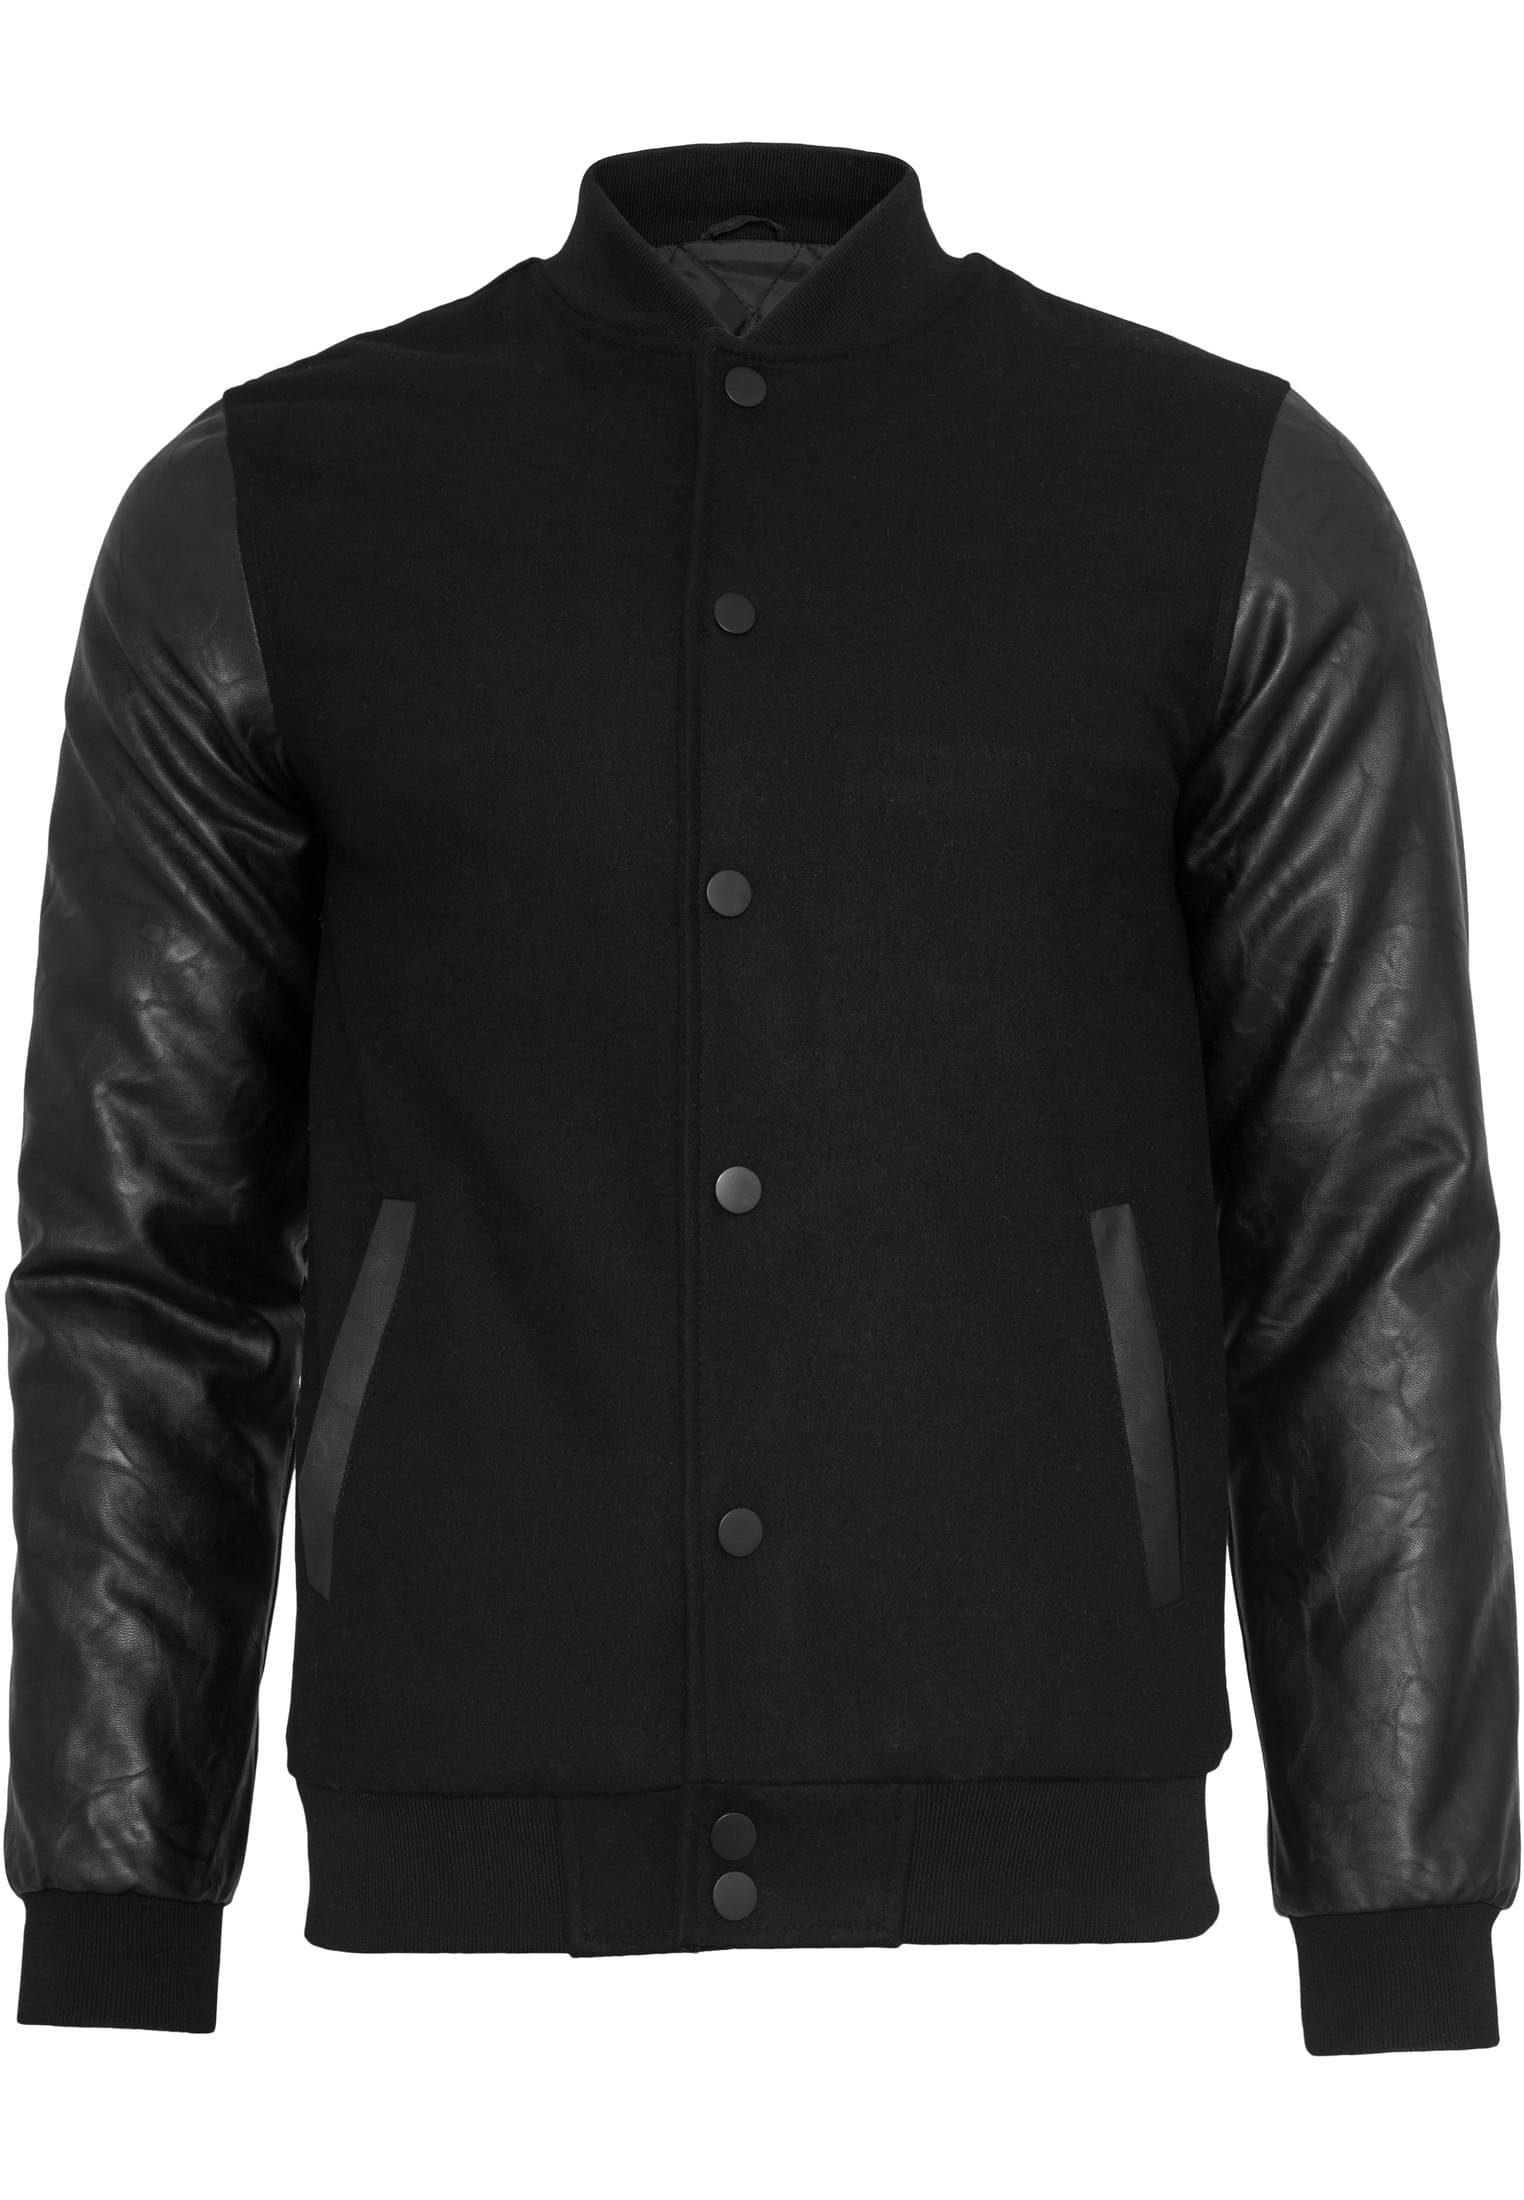 Sonderpreisverkauf! URBAN CLASSICS Outdoorjacke Herren Oldschool (1-St) College Jacket black/black